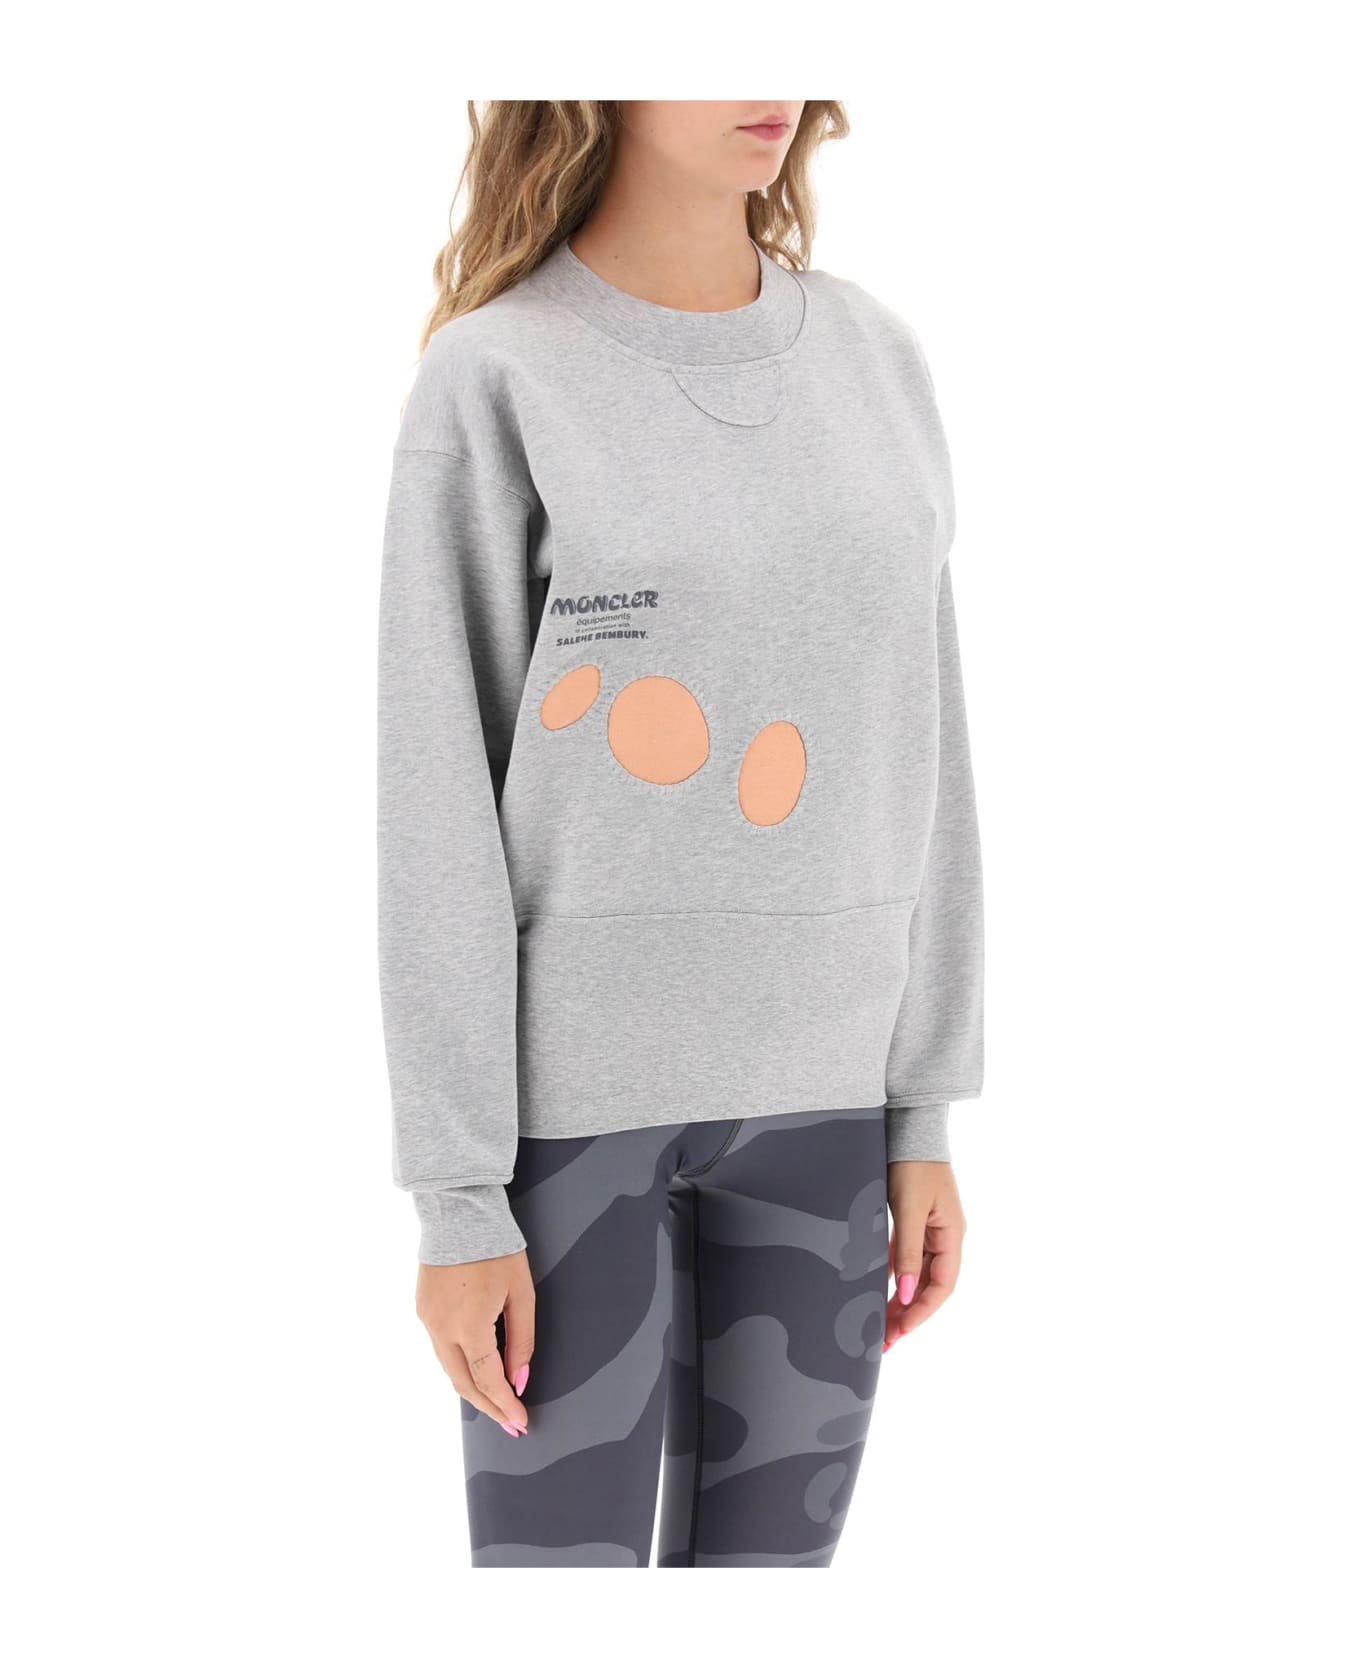 Moncler Genius X Salehe Bembury Sweatshirt - Grey フリース